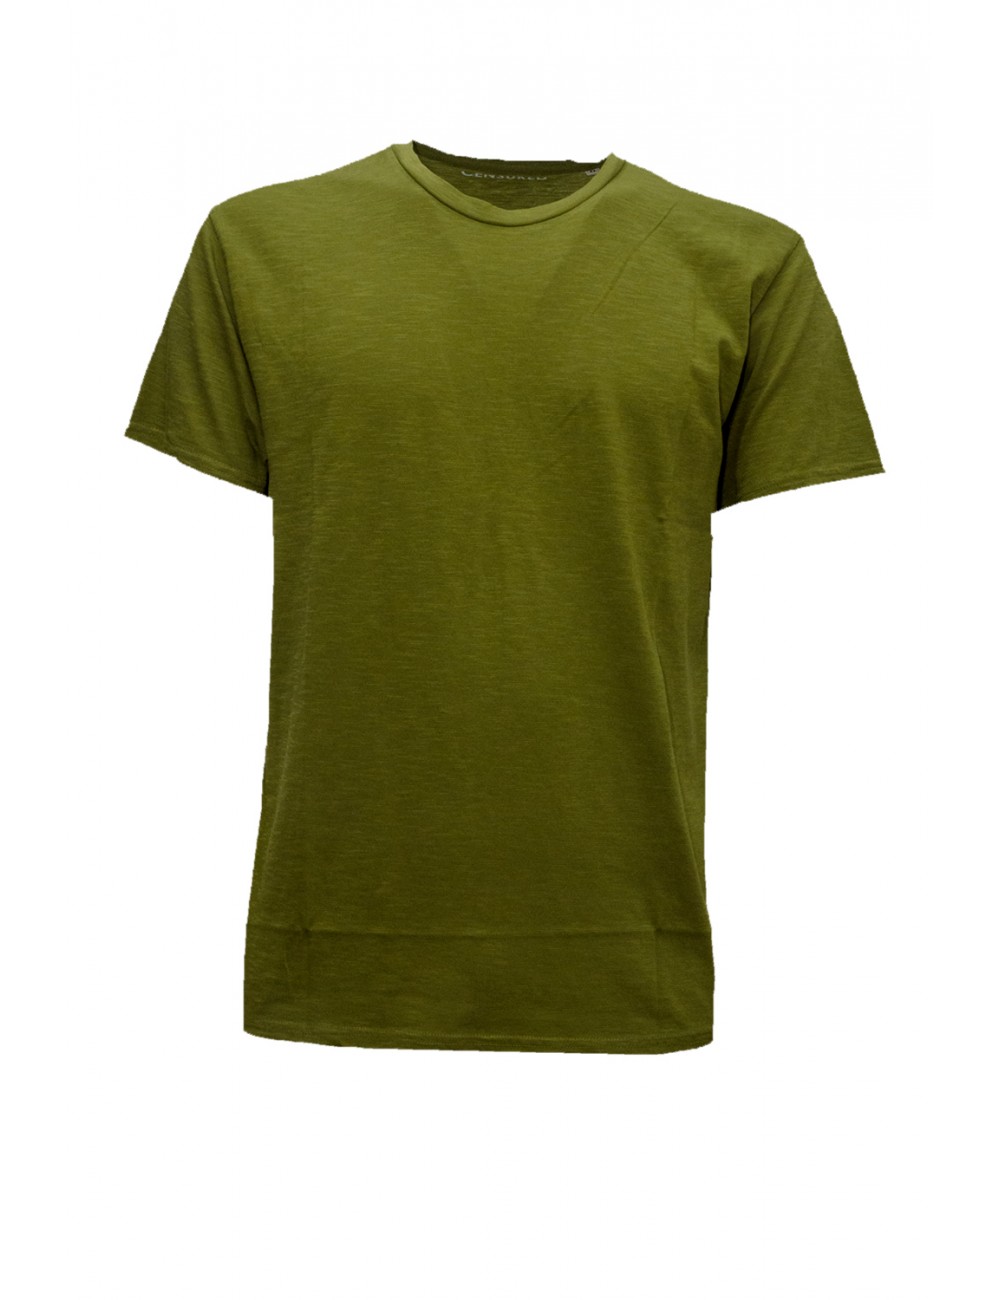 t-shirt censured UOMO VERDE ARMY GREEN - TM 3556 T JSSG 32 vista frontale